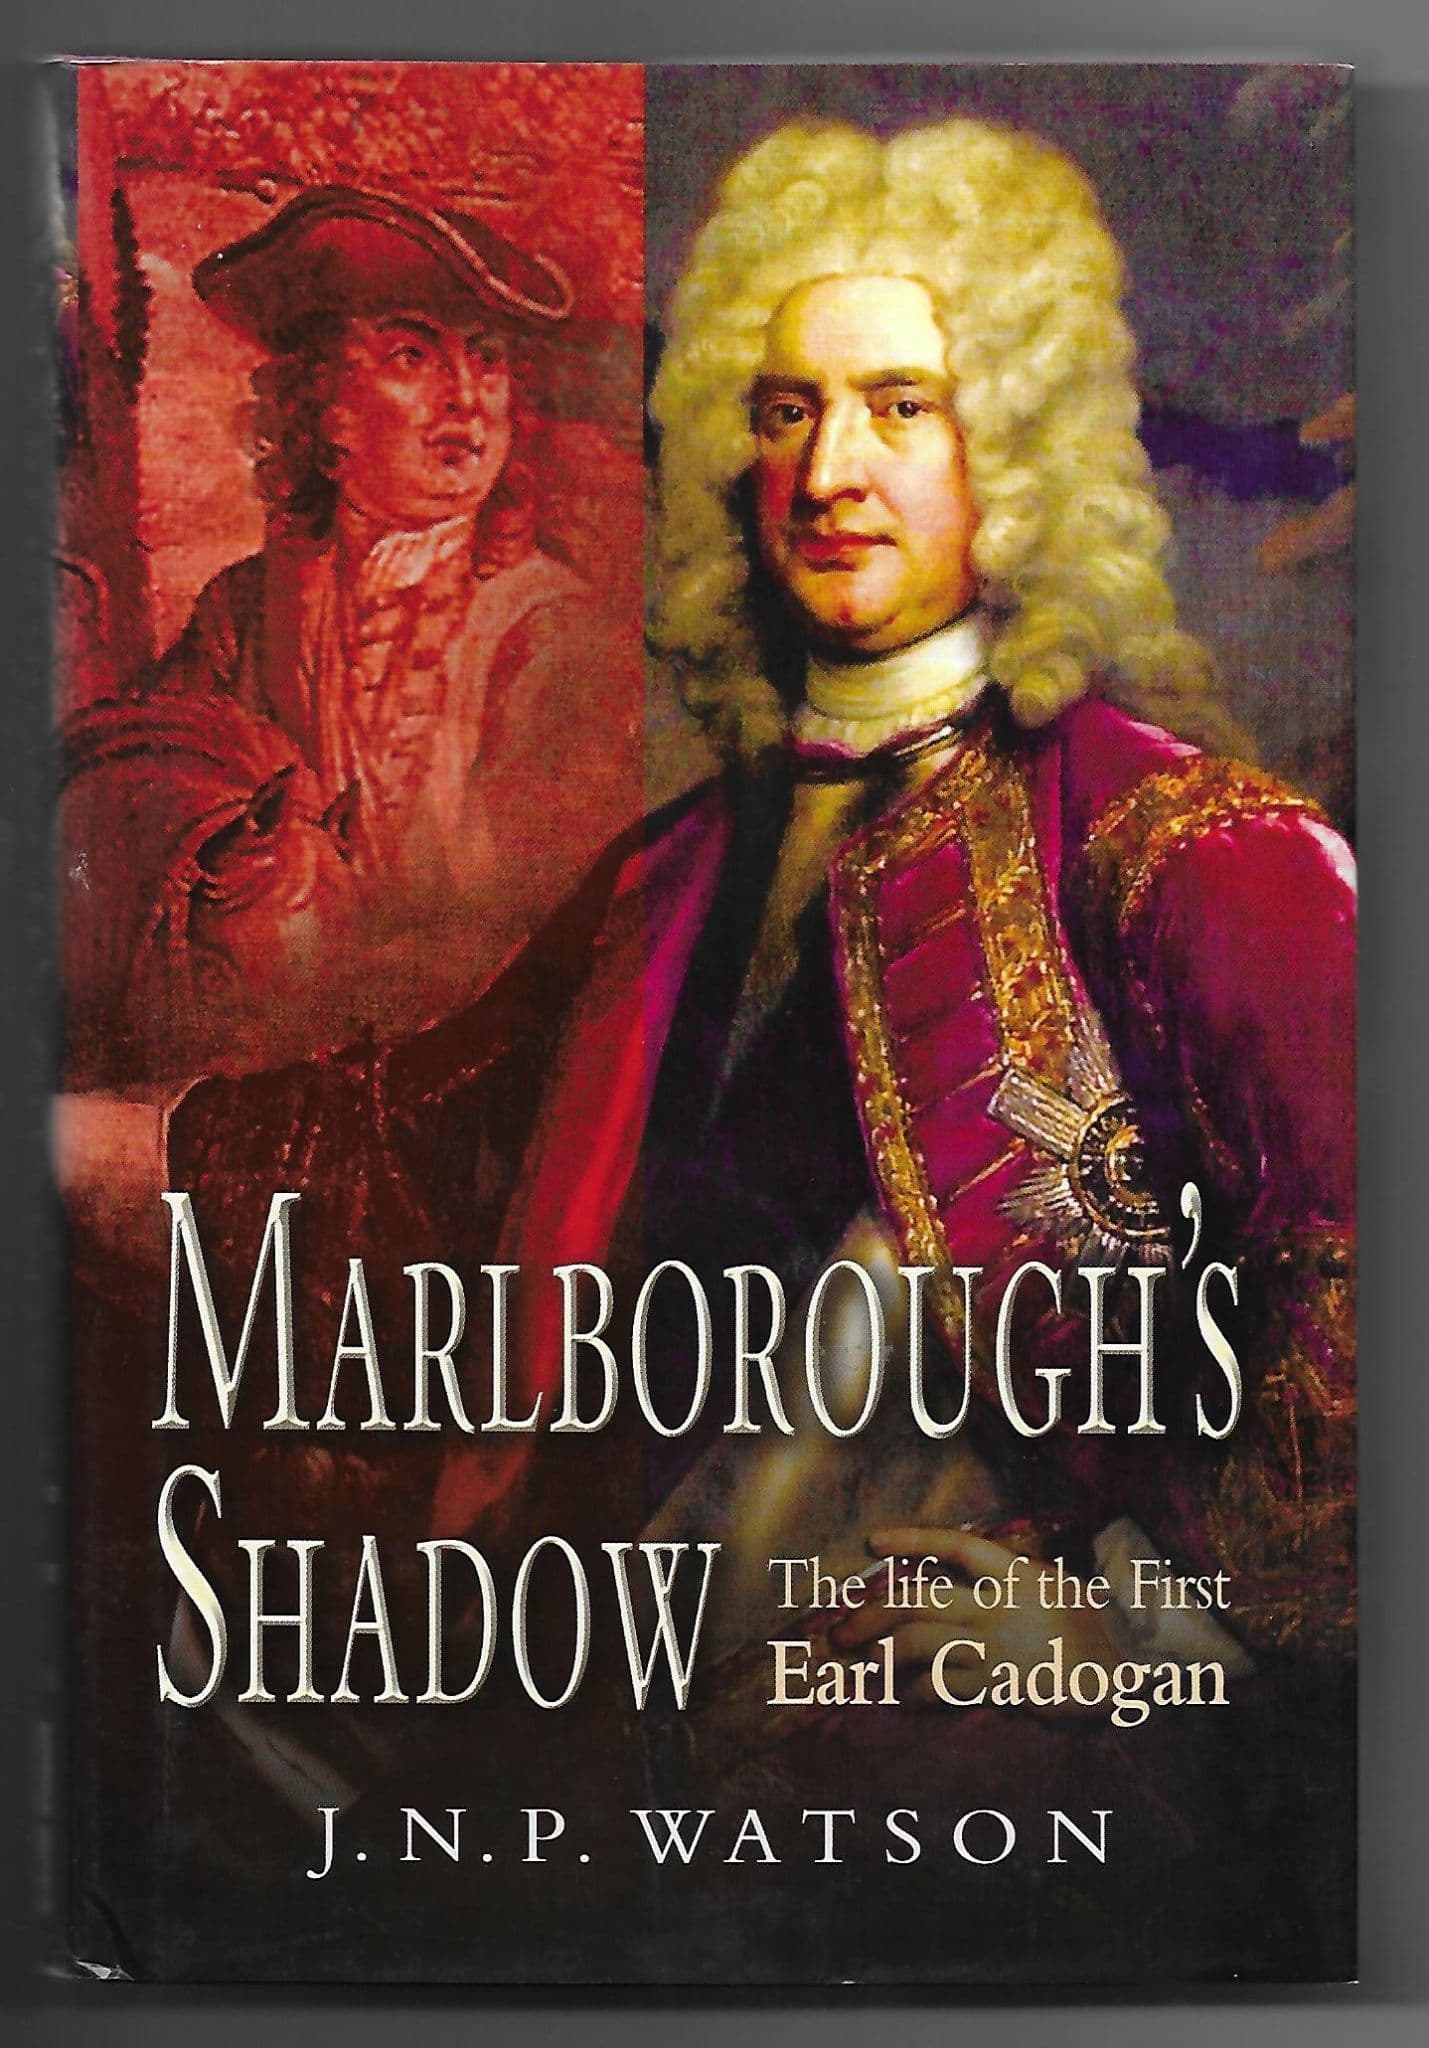 Marlborough's Shadow, The Life of the First Earl Cadogan